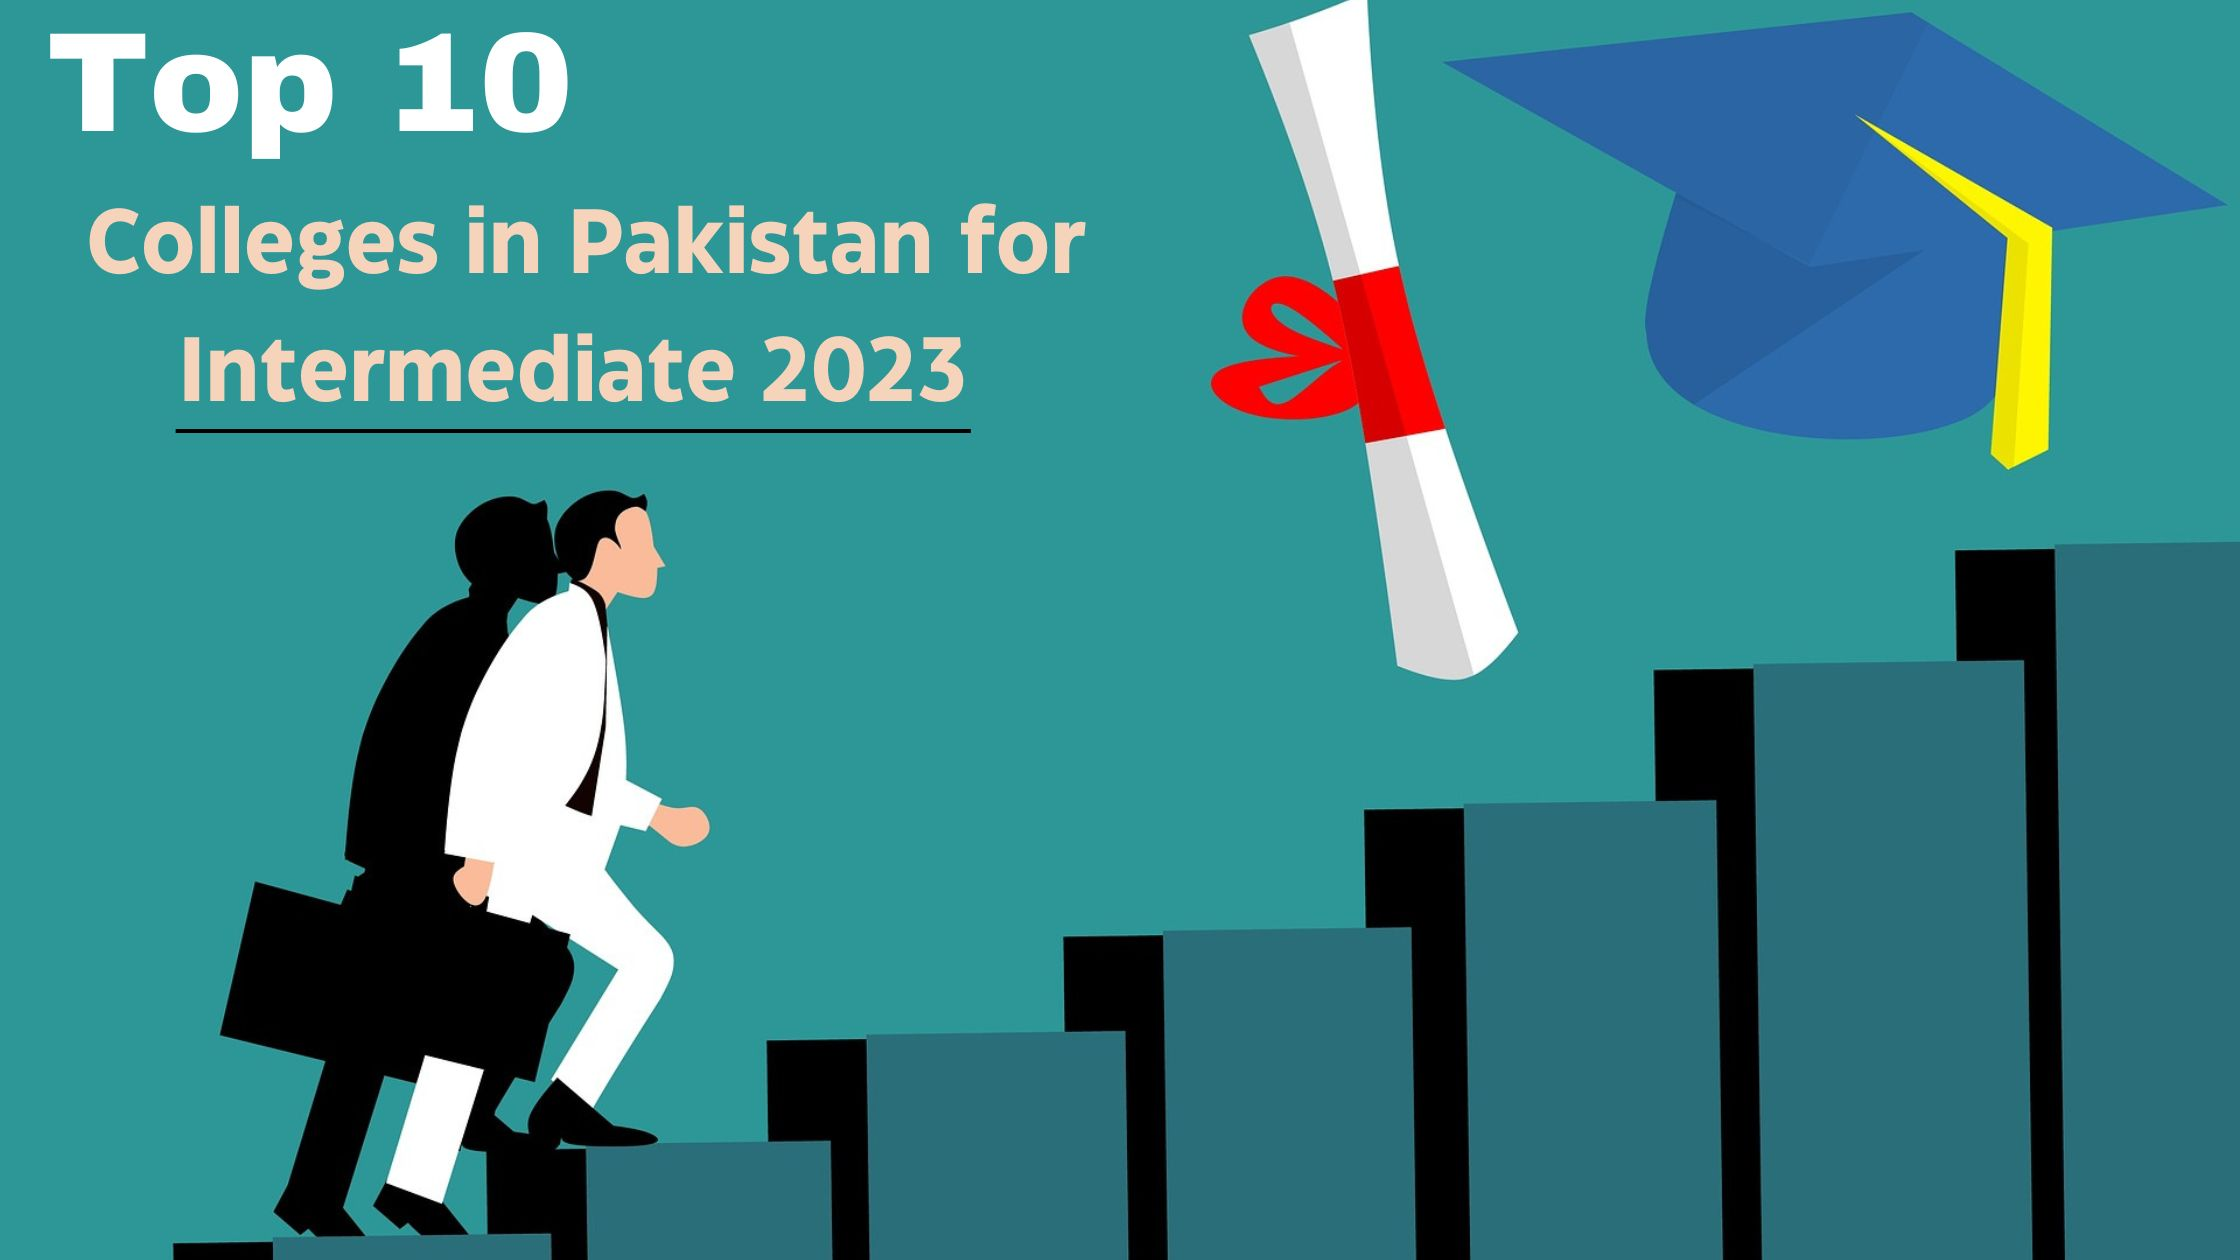 Top 10 Colleges in Pakistan for Intermediate 2023